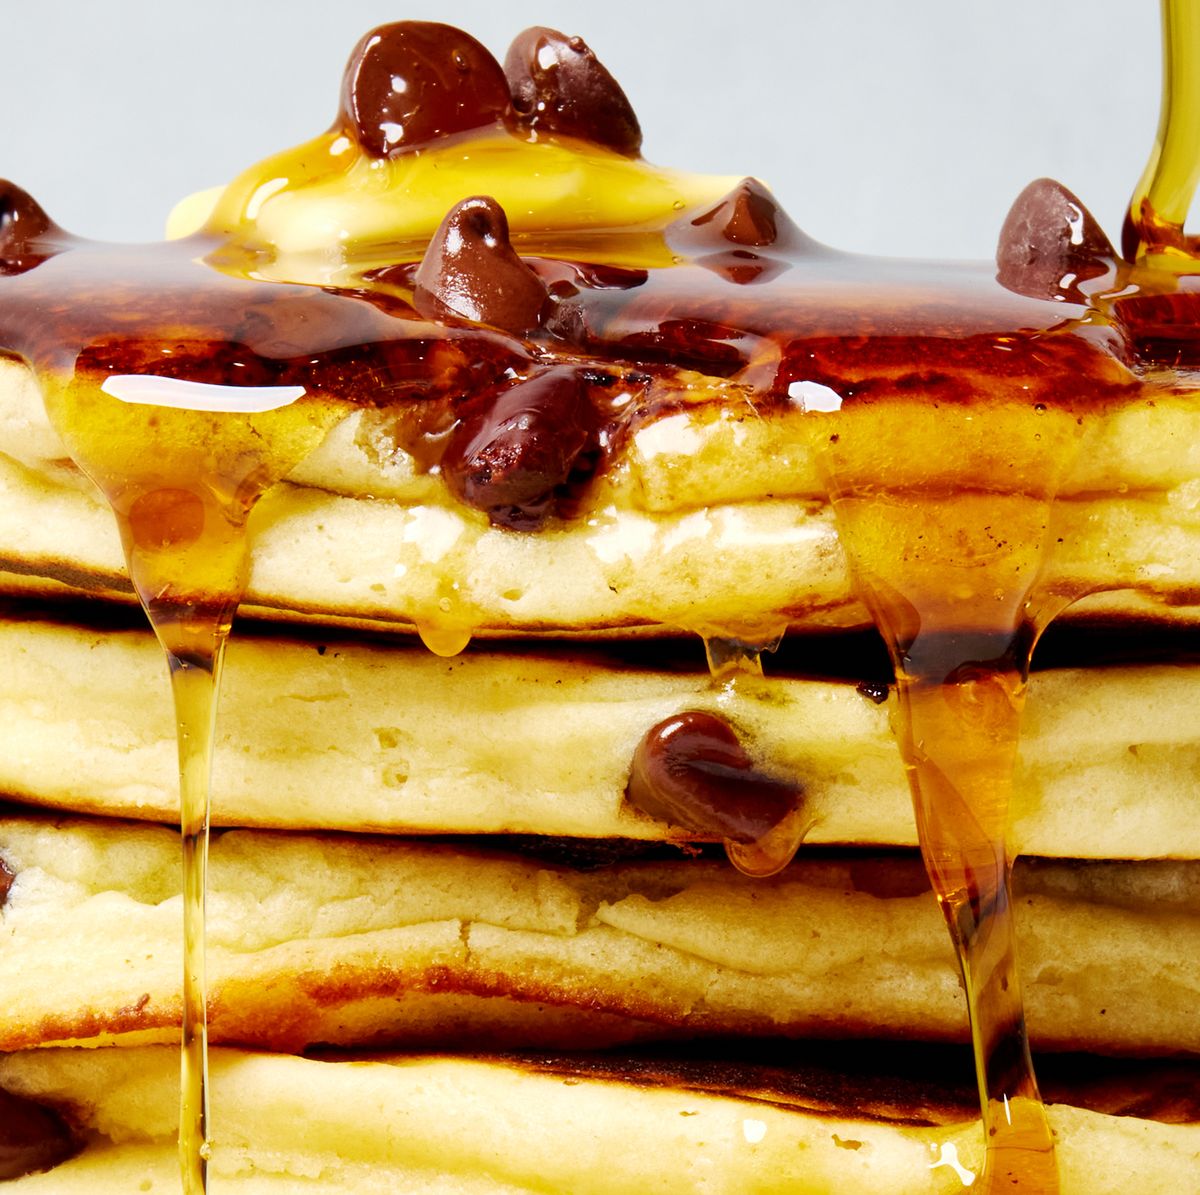 Best Chocolate Chip Pancakes Recipe - How To Make Chocolate Chip Pancakes